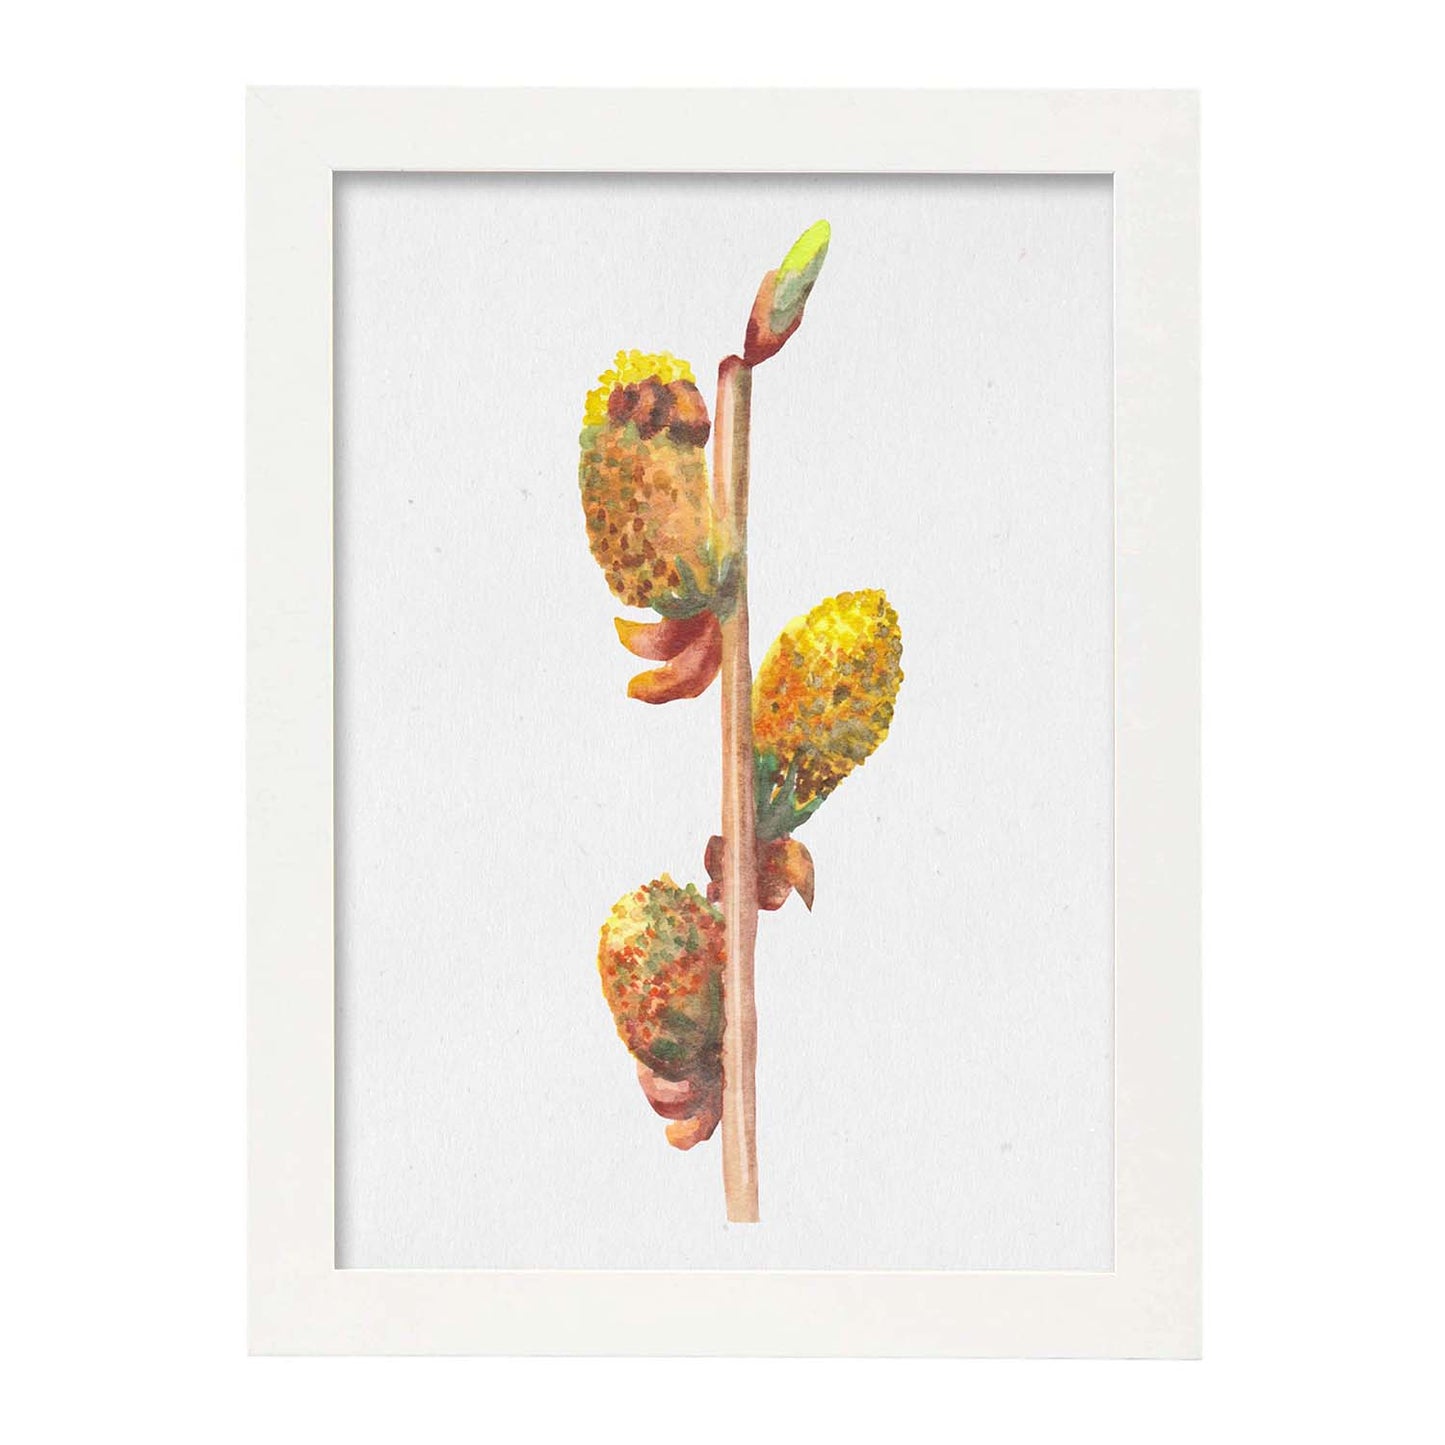 Poster de ramas con estilo de óleo. Lámina Ramas 7, con dibujos pintados de ramas, hojas, y flores.-Artwork-Nacnic-A4-Marco Blanco-Nacnic Estudio SL